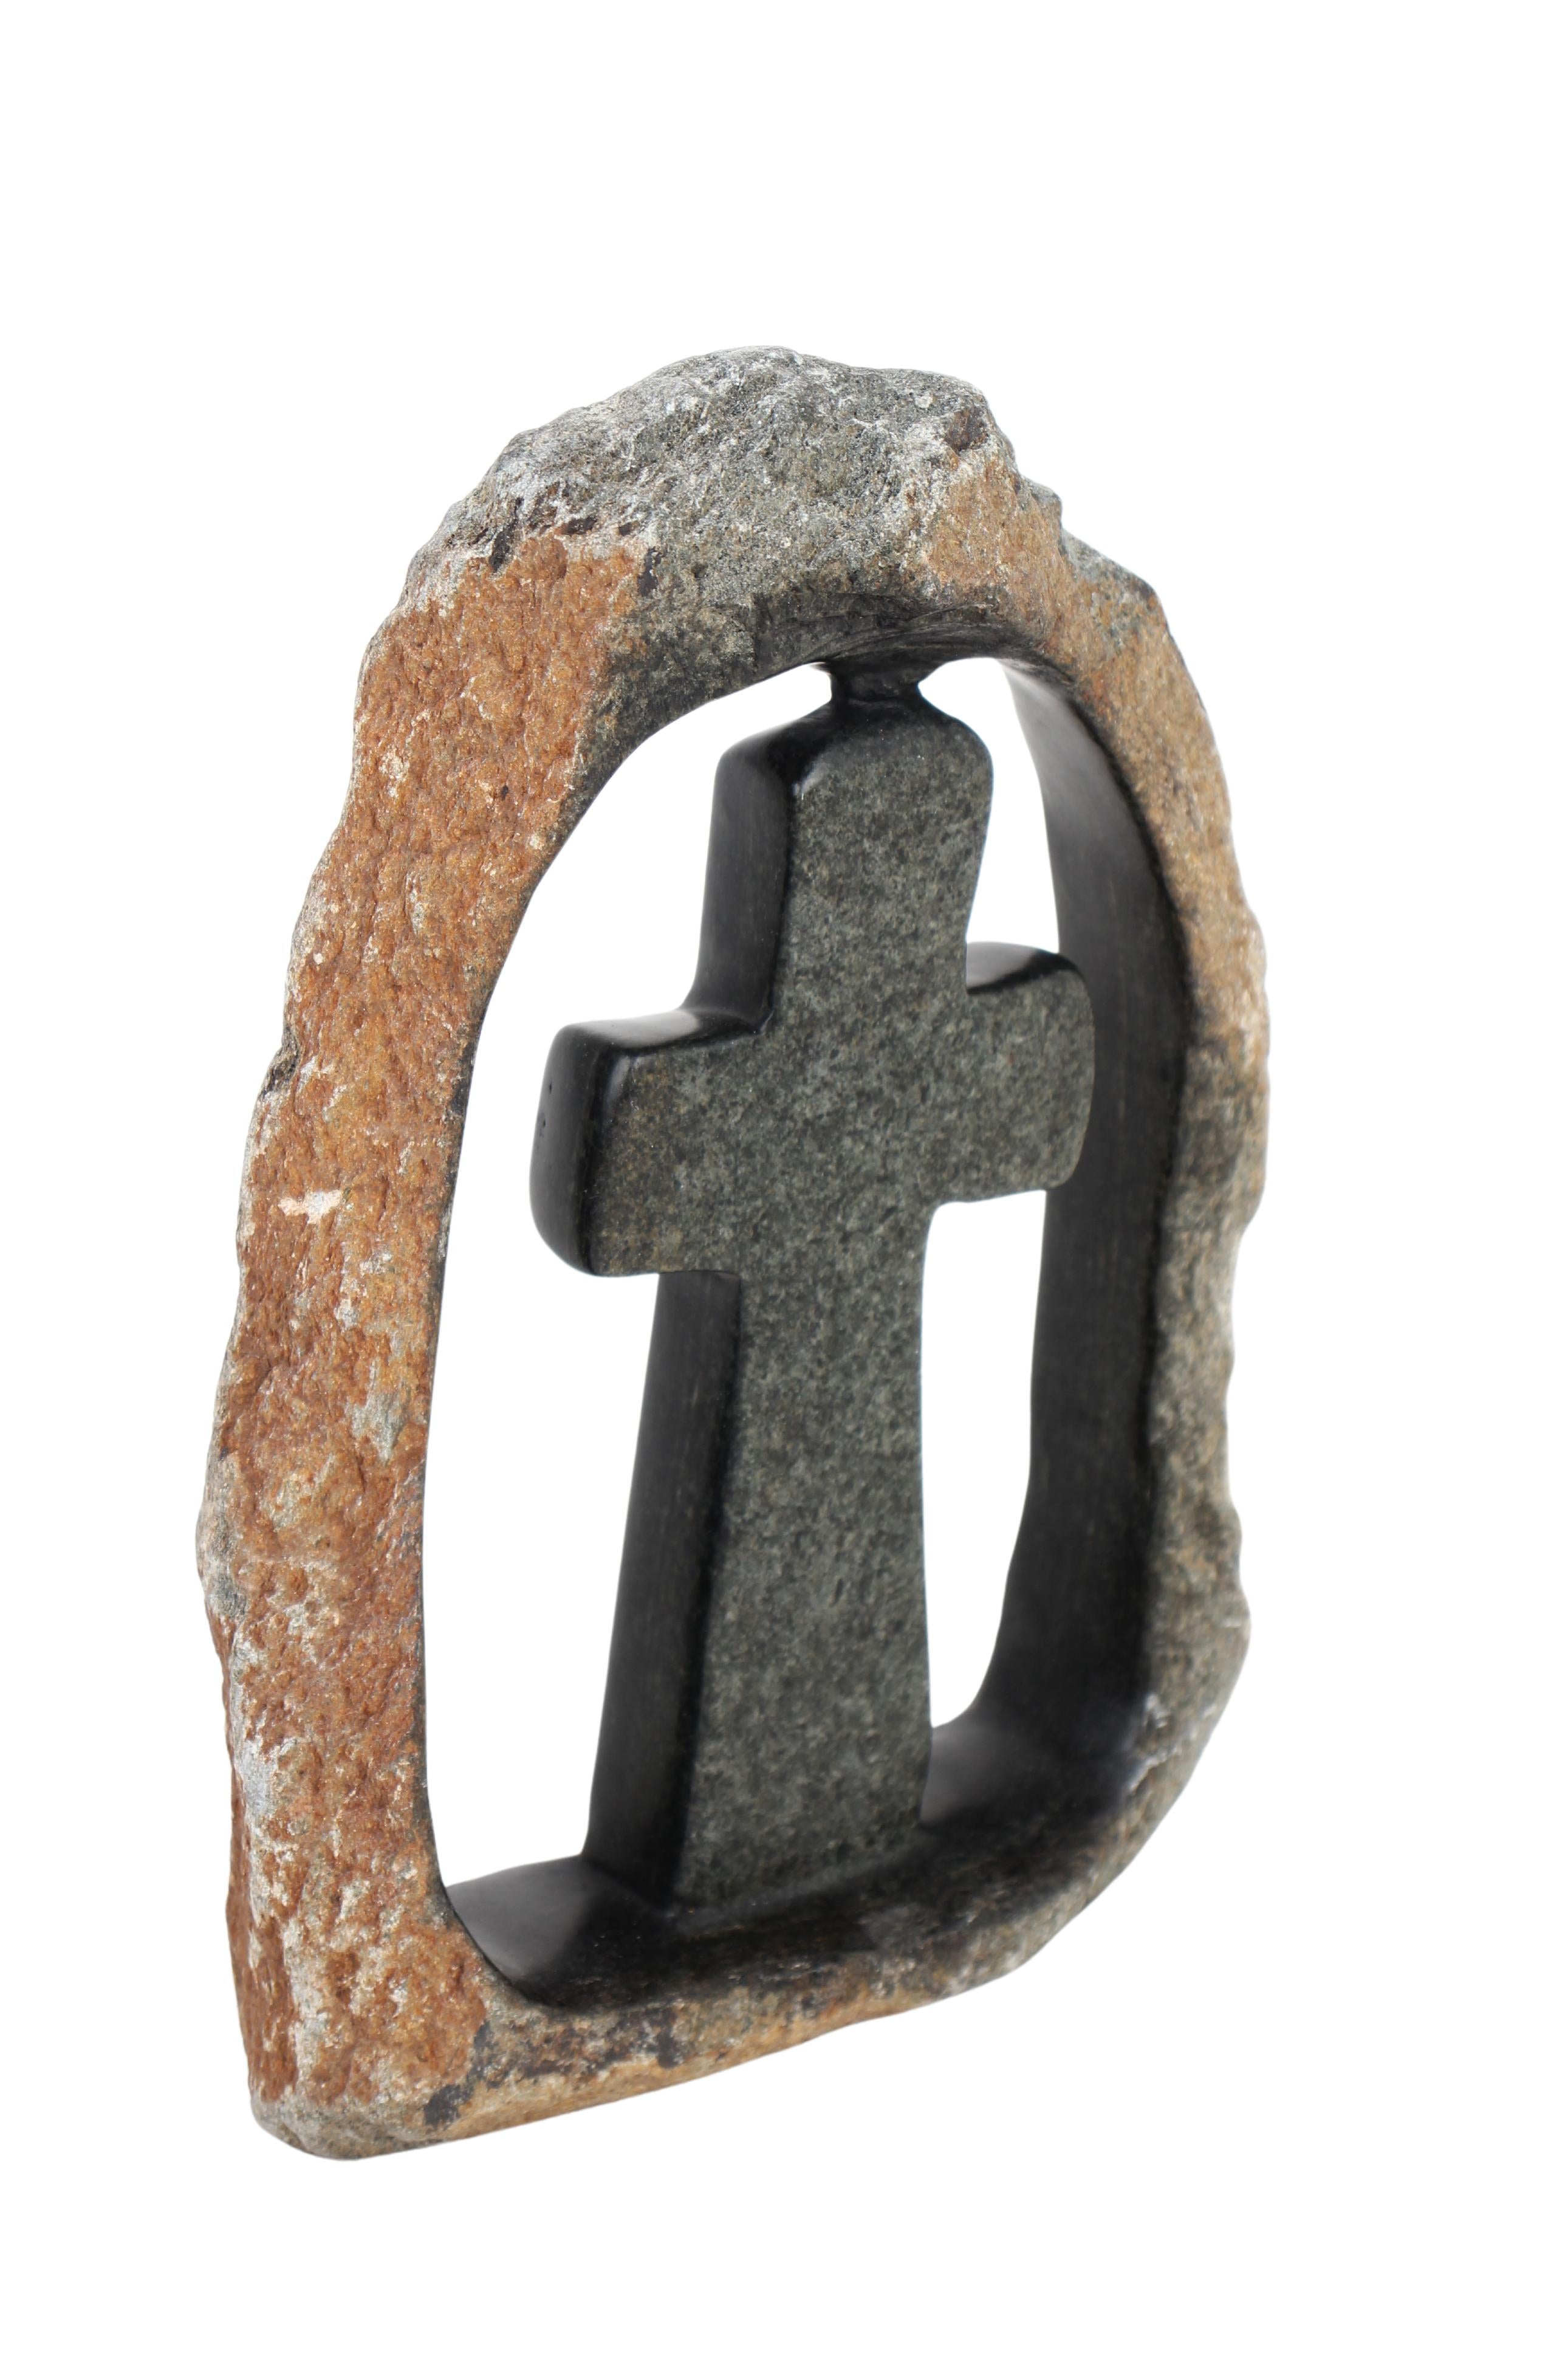 Shona Tribe Serpentine Stone Crosses ~9.8" Tall (New 2024) - Shona Stone